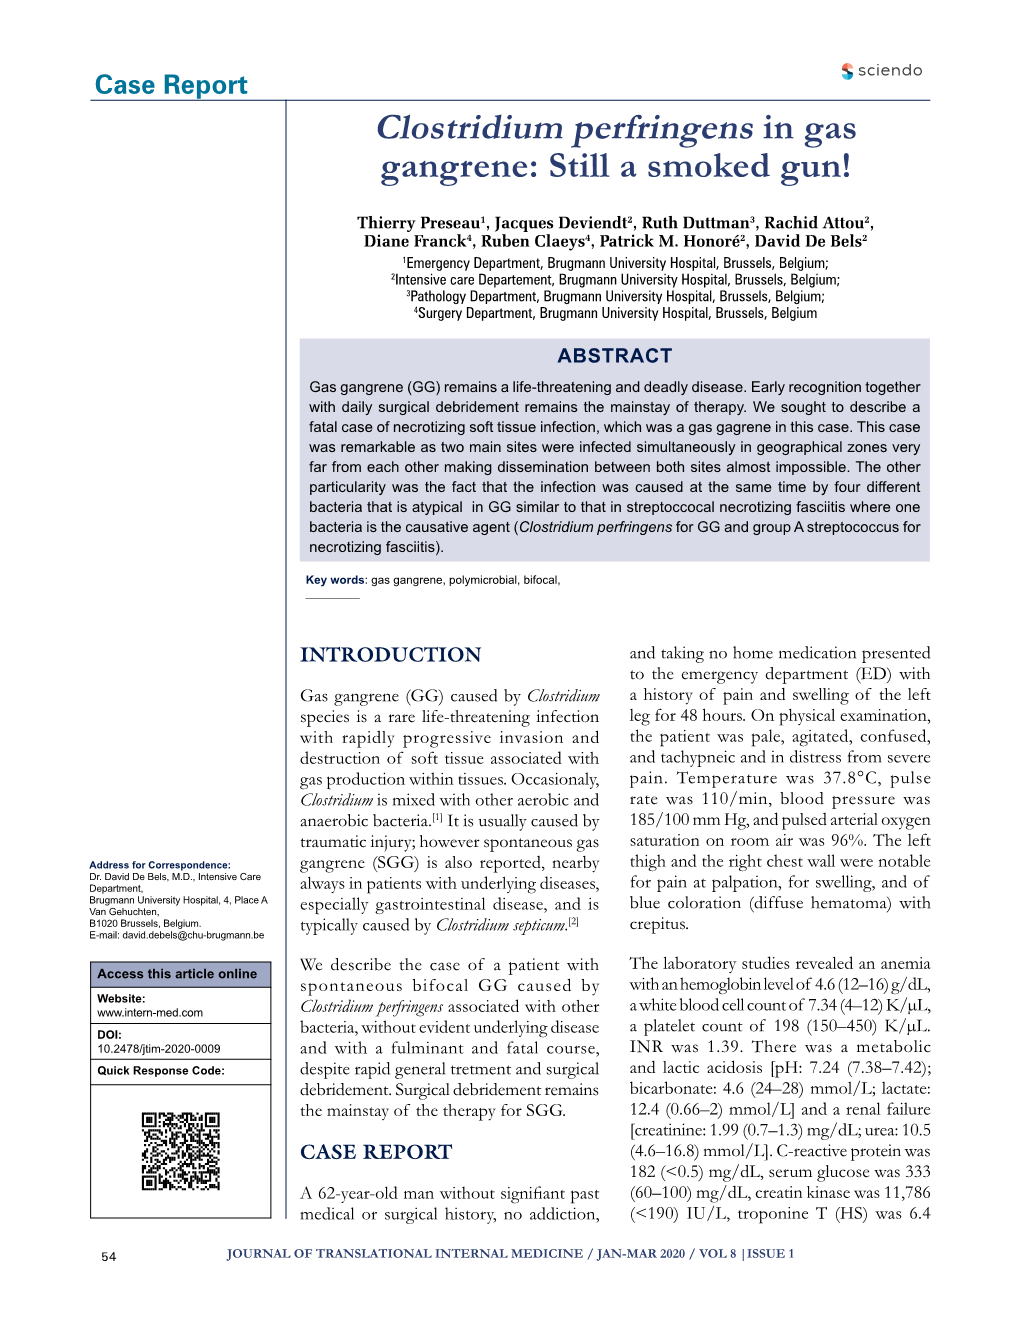 Clostridium Perfringens in Gas Gangrene: Still a Smoked Gun!